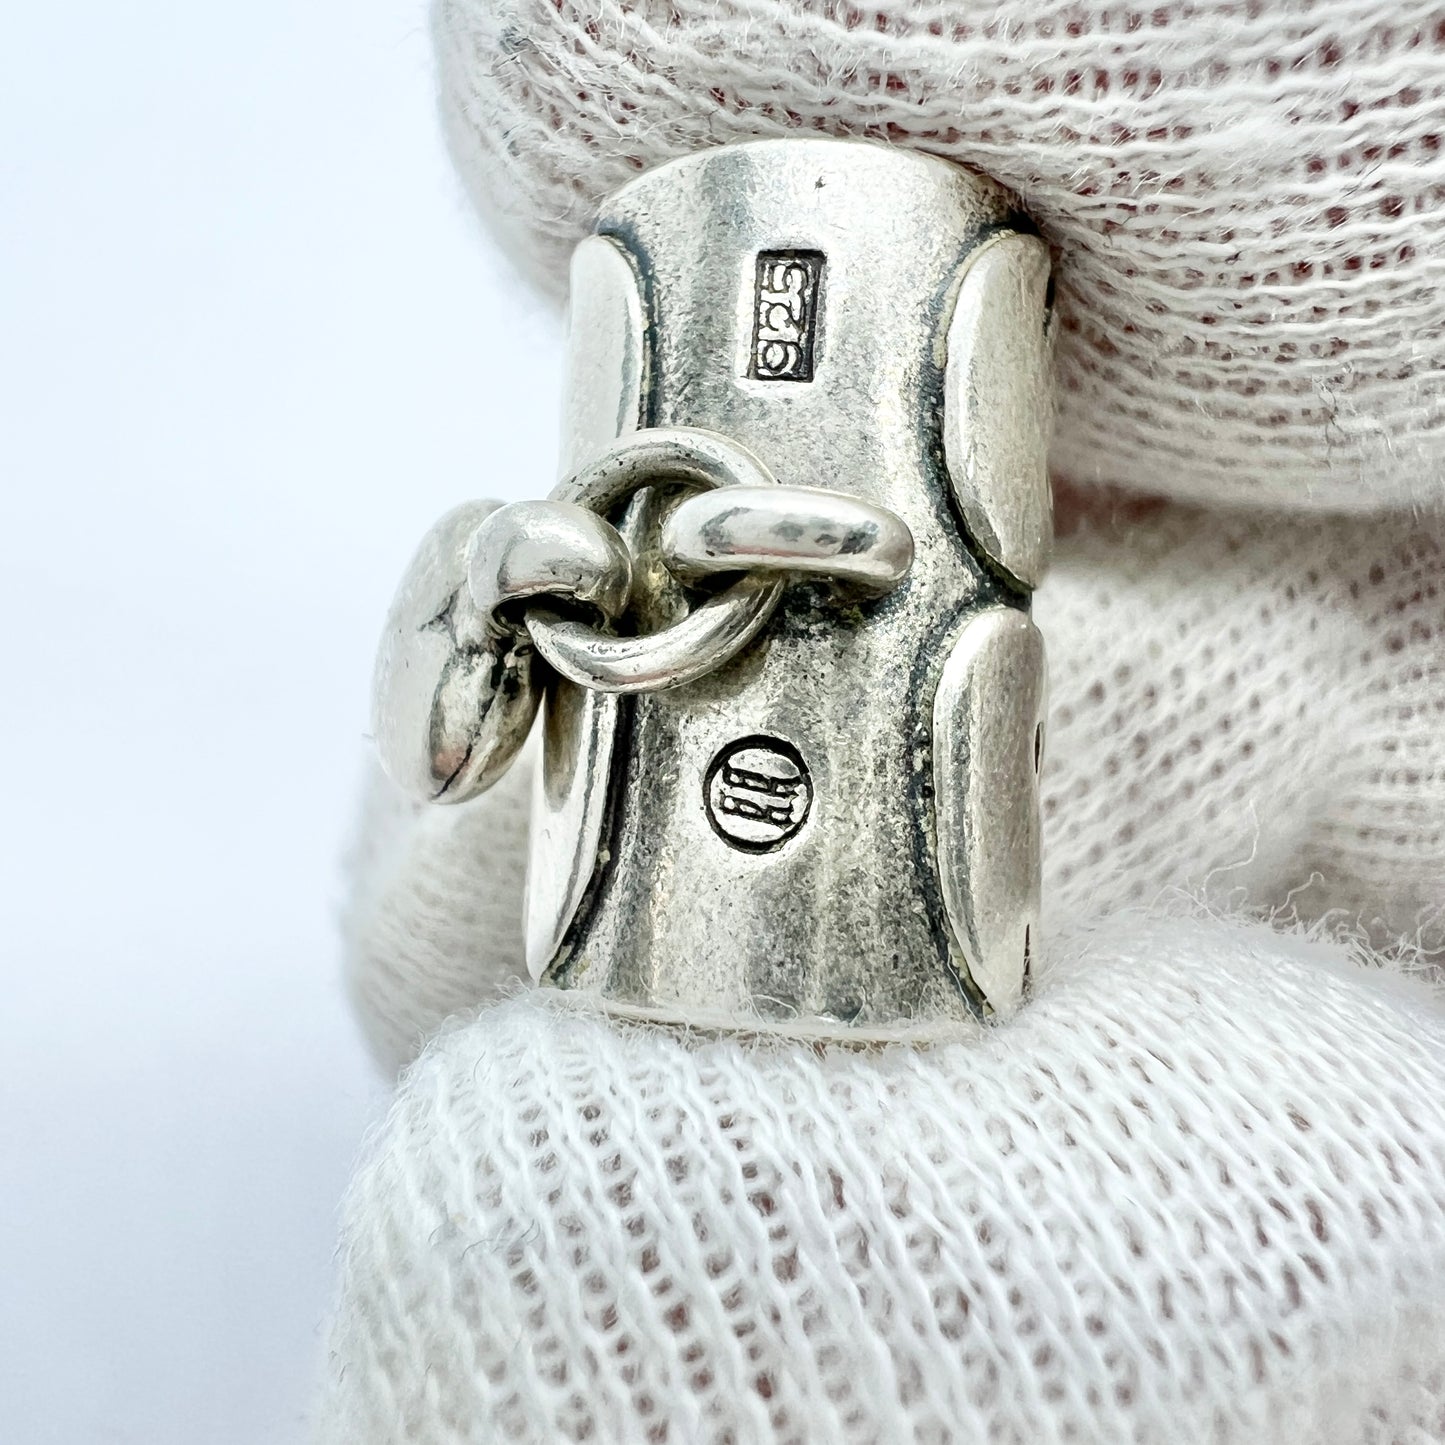 Kalevala Koru, Finland. Vintage Sterling Silver Charm Pendant.